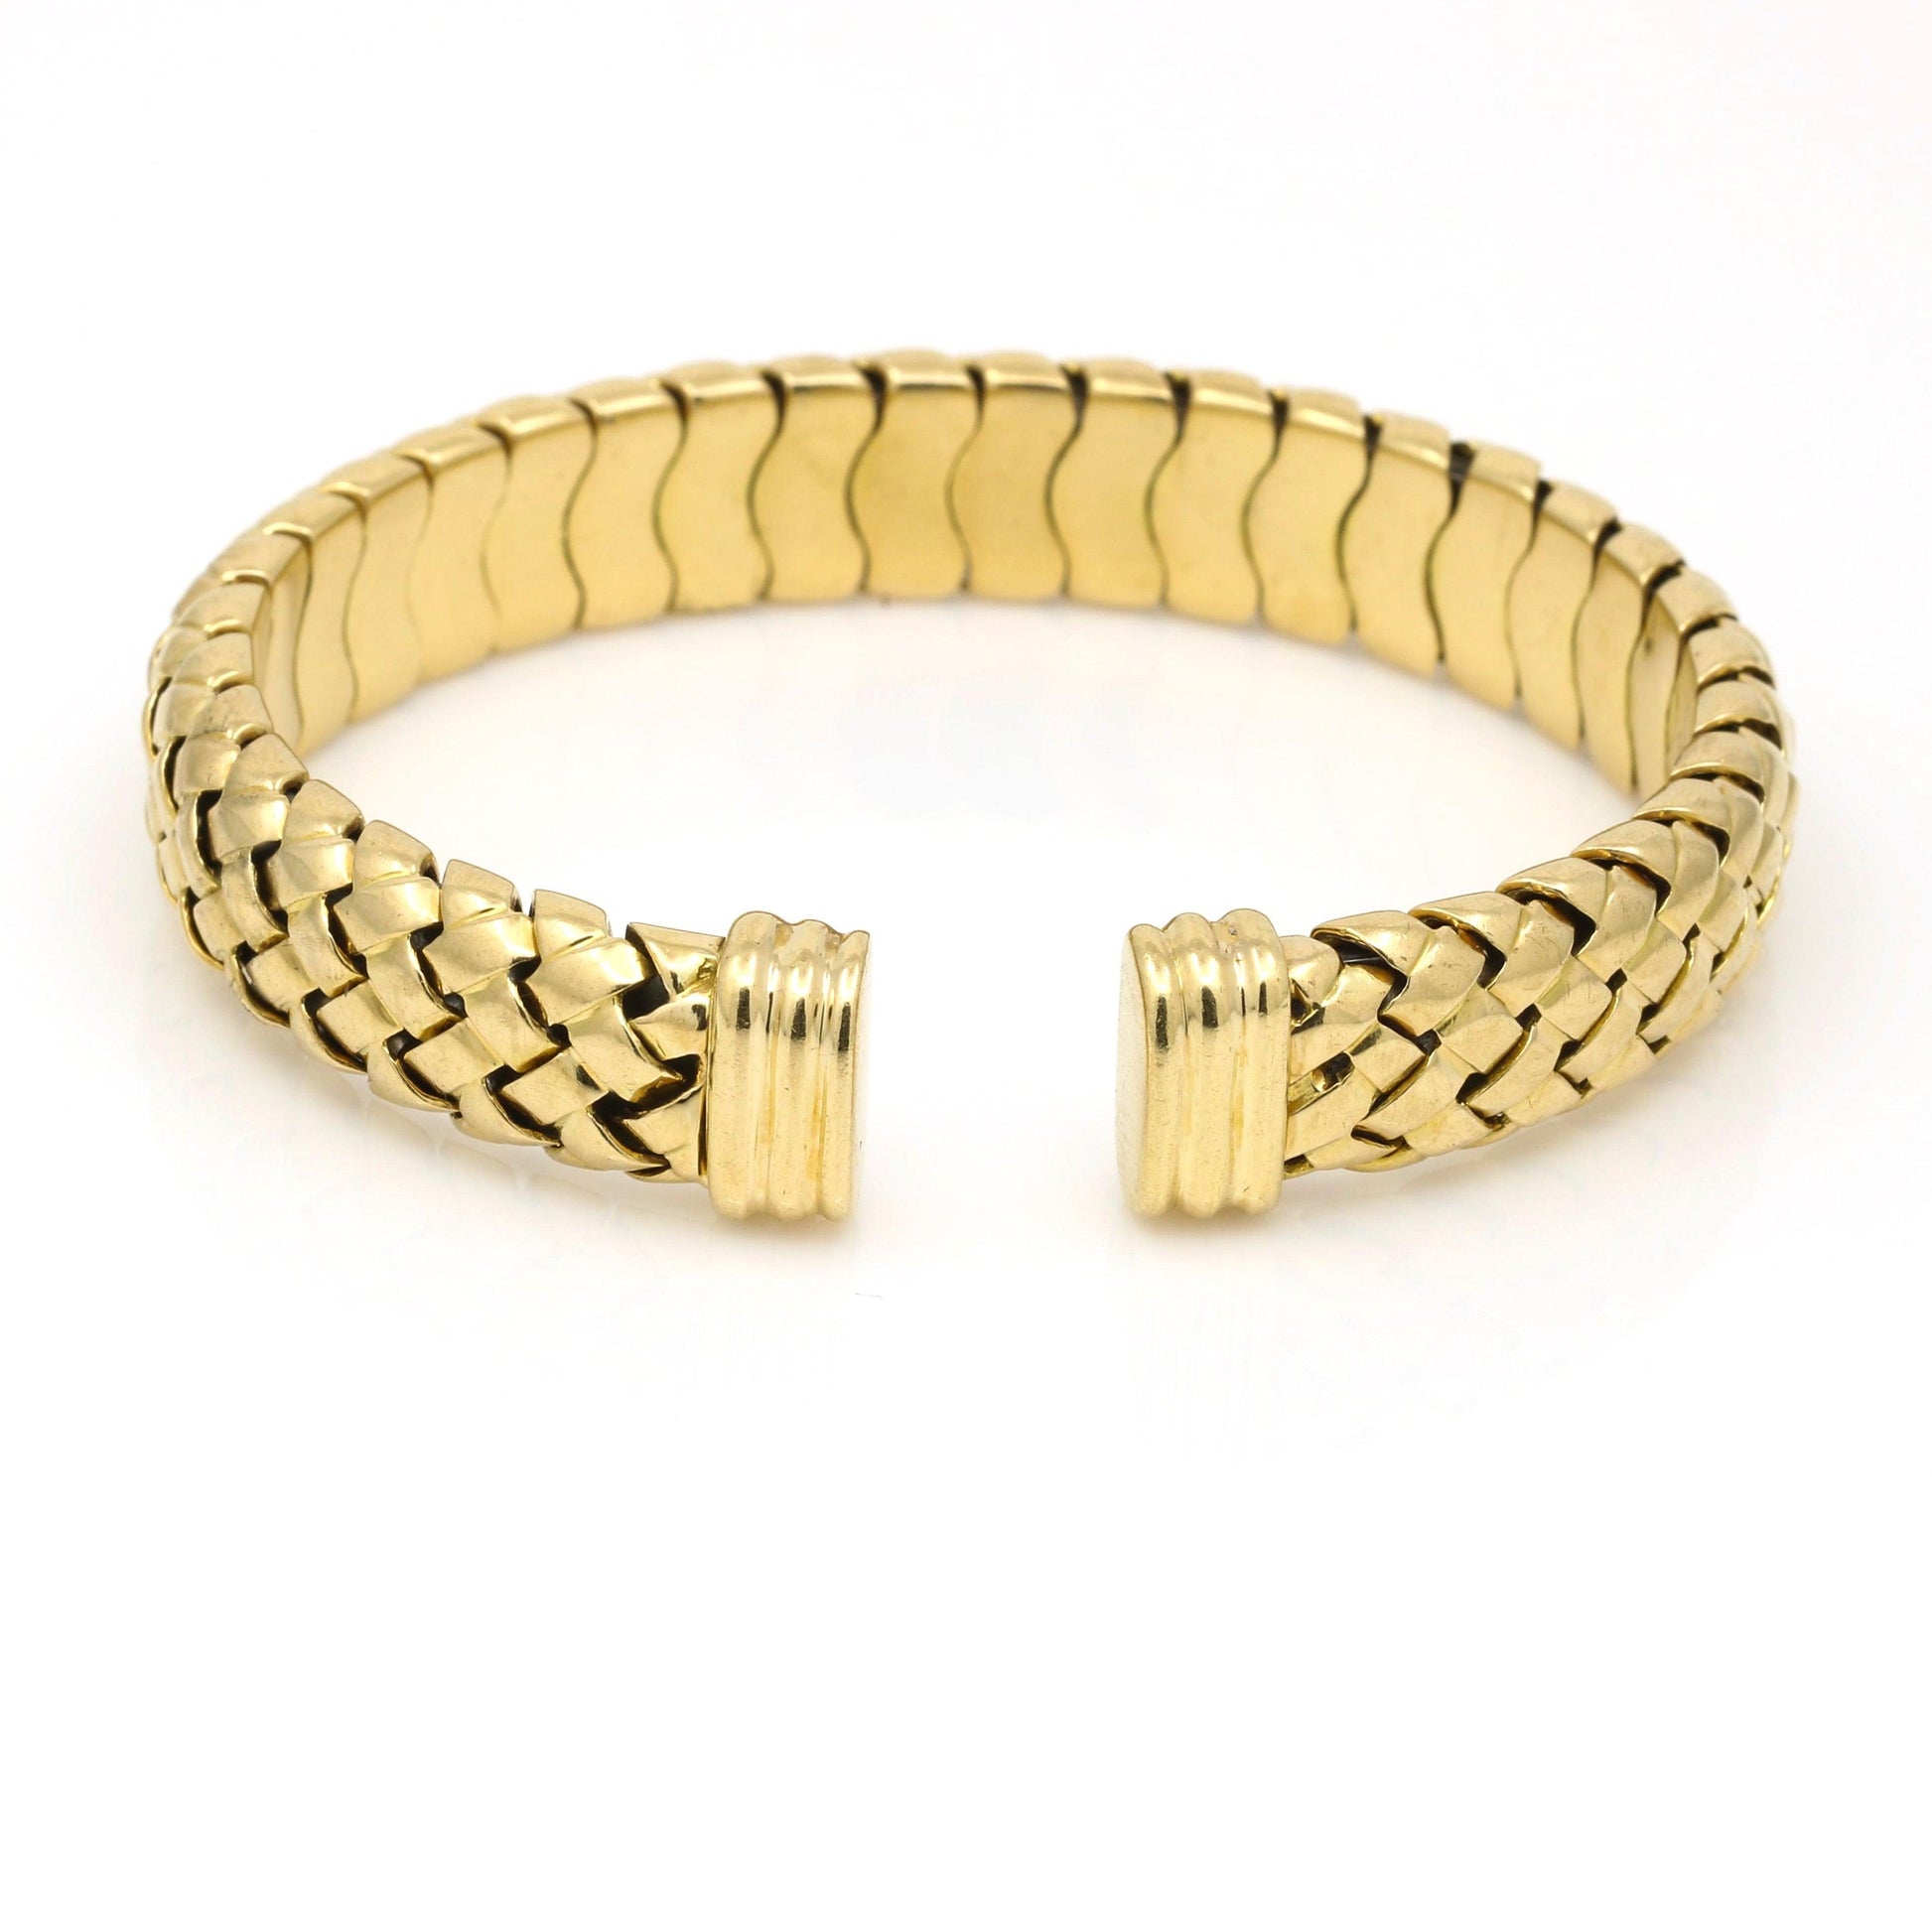 Tiffany & Co. Vannerie 1997 Woven Cuff Bracelet in 18k Yellow Gold - 31 Jewels Inc.